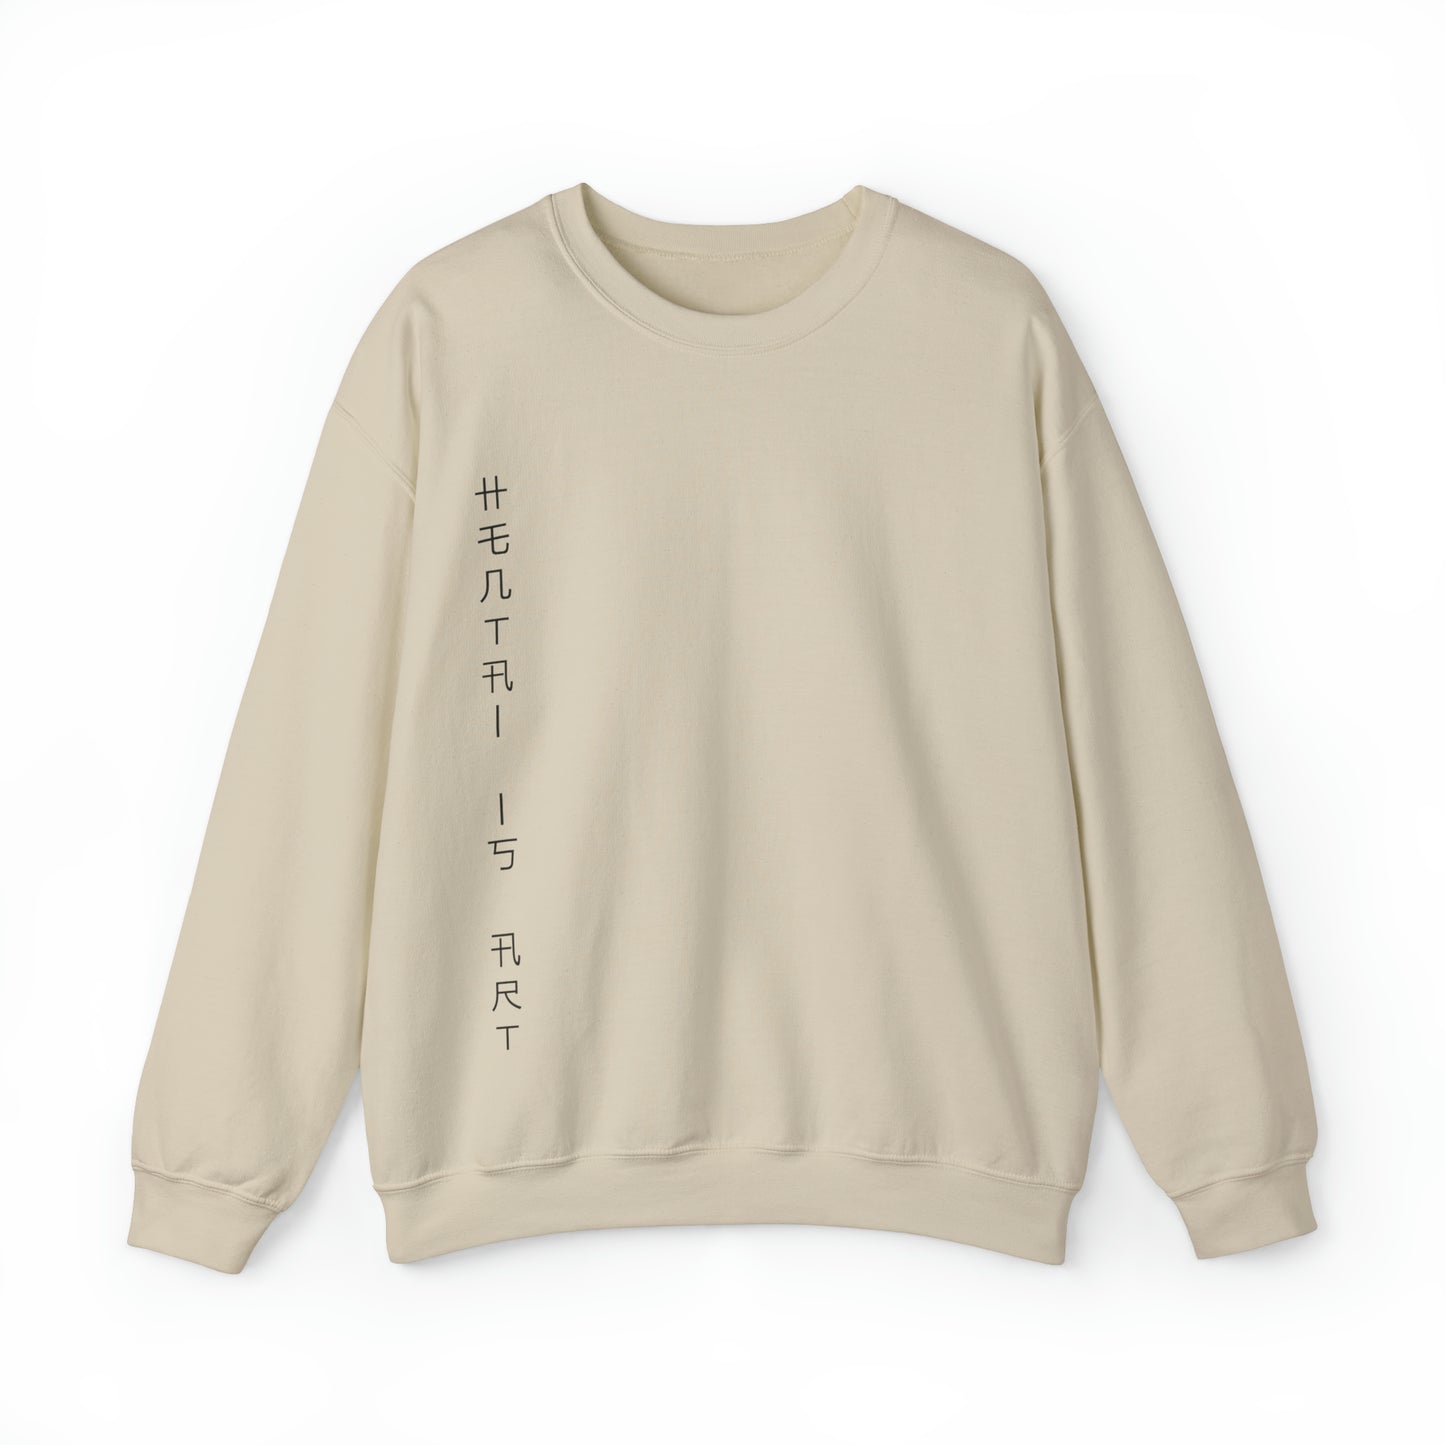 Hentai is Art [Design #3] - Sweatshirt